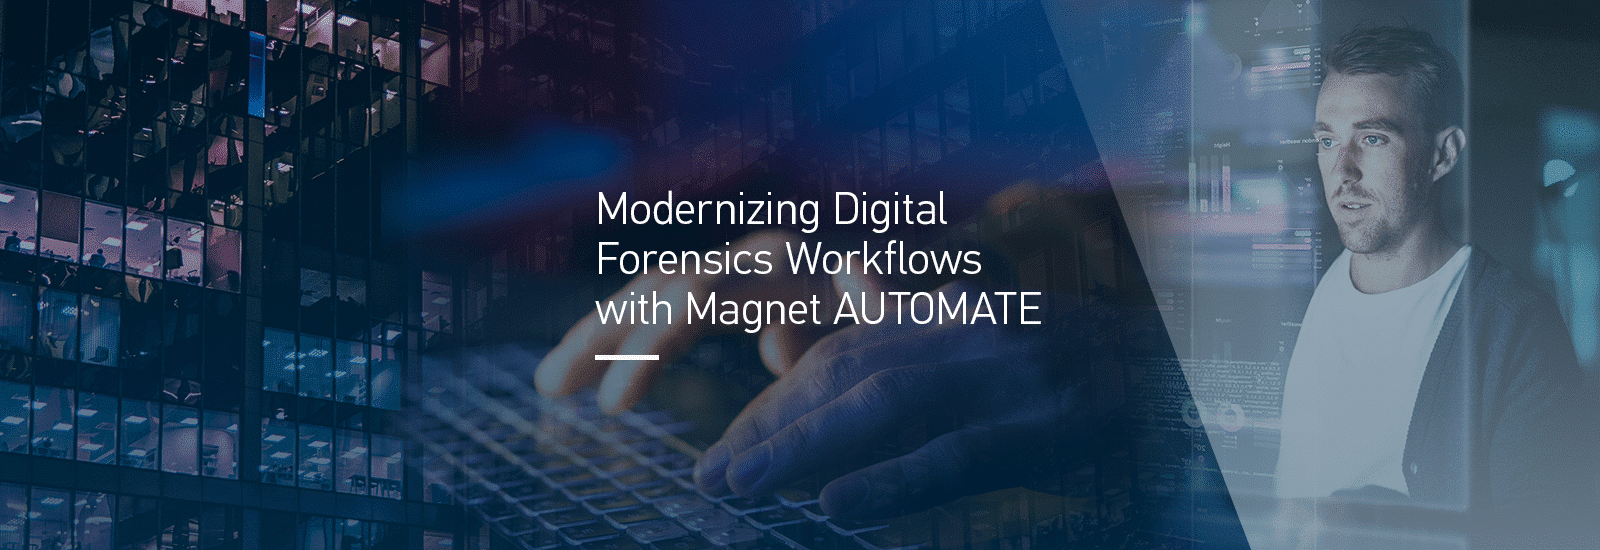 A decorative header for the Modernizing Digital Forensics Workflows piece